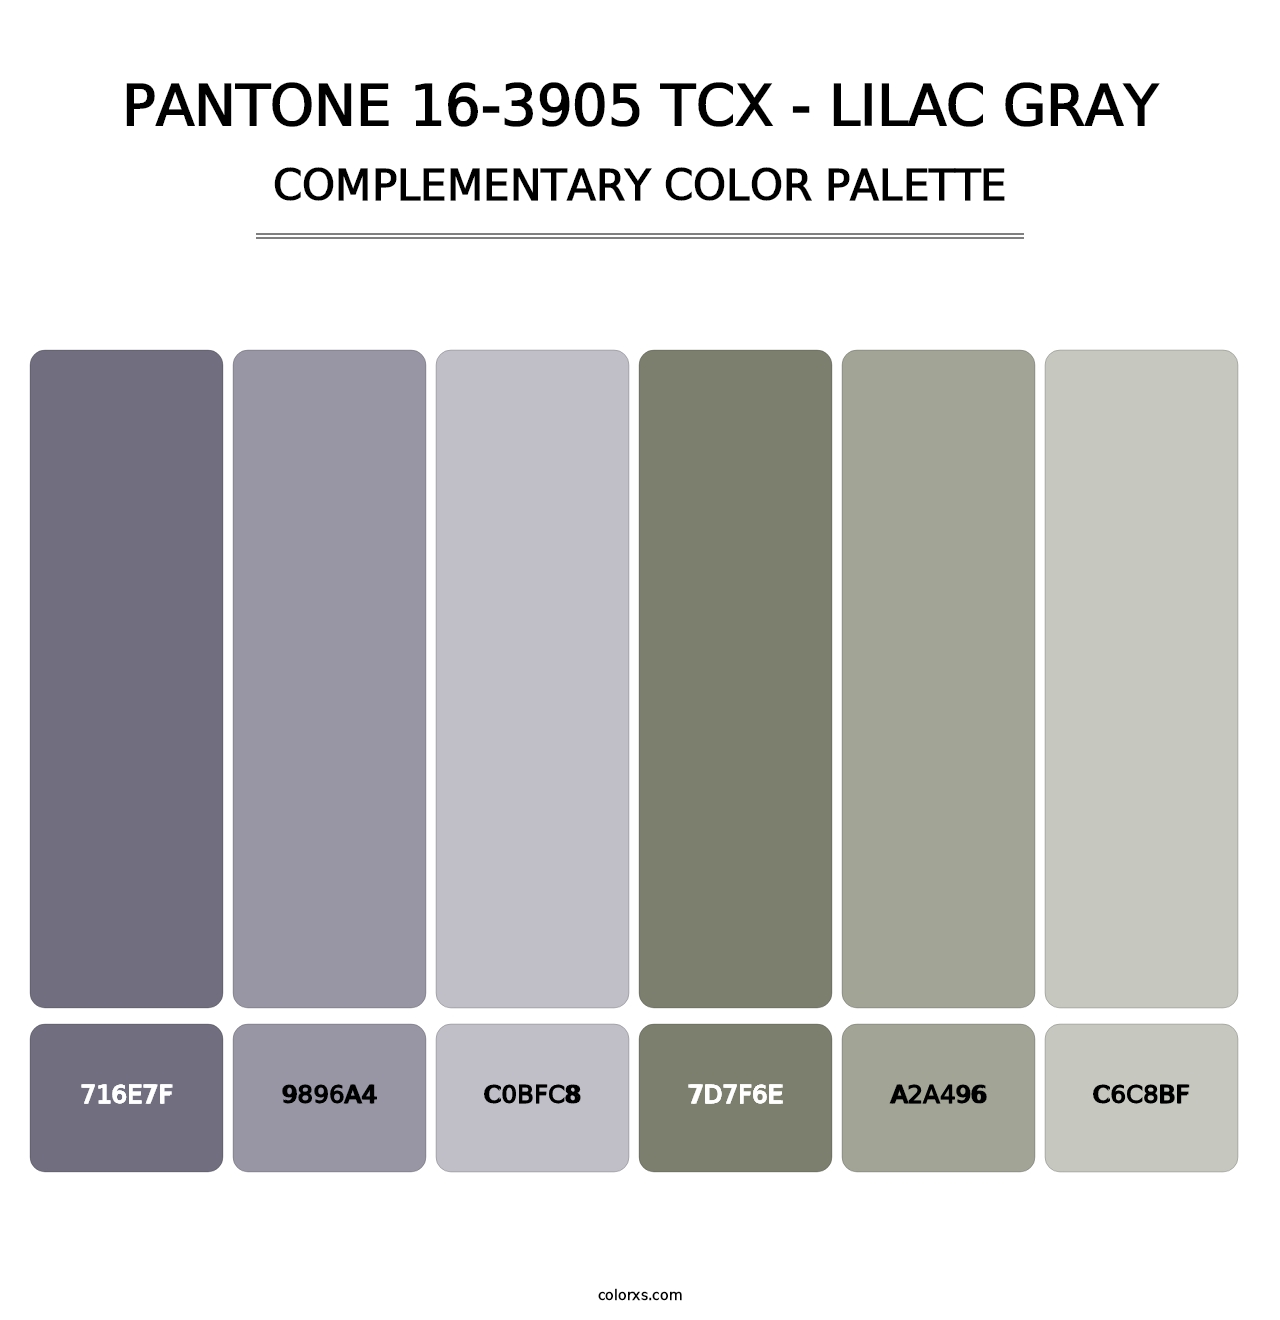 PANTONE 16-3905 TCX - Lilac Gray - Complementary Color Palette